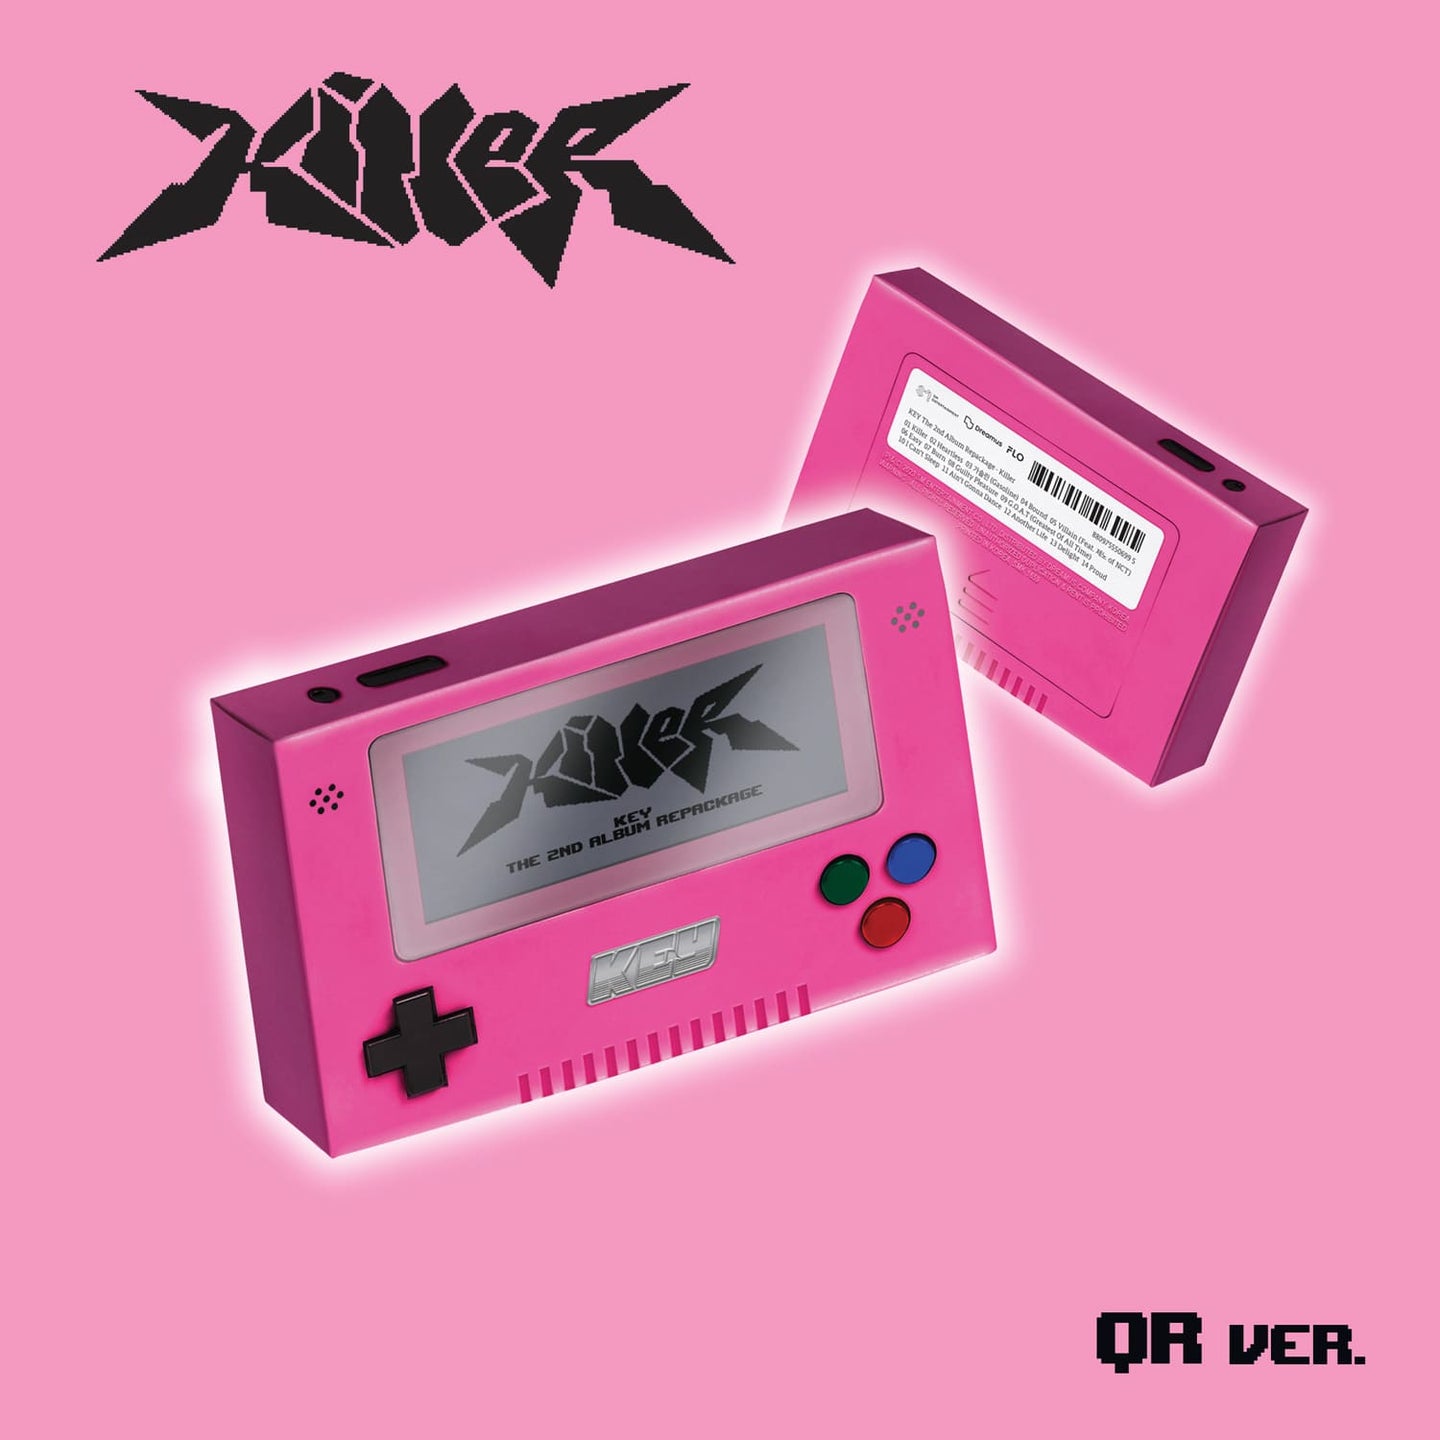 KEY Album Vol. 2 (Repackage) - Killer (QR Ver.)